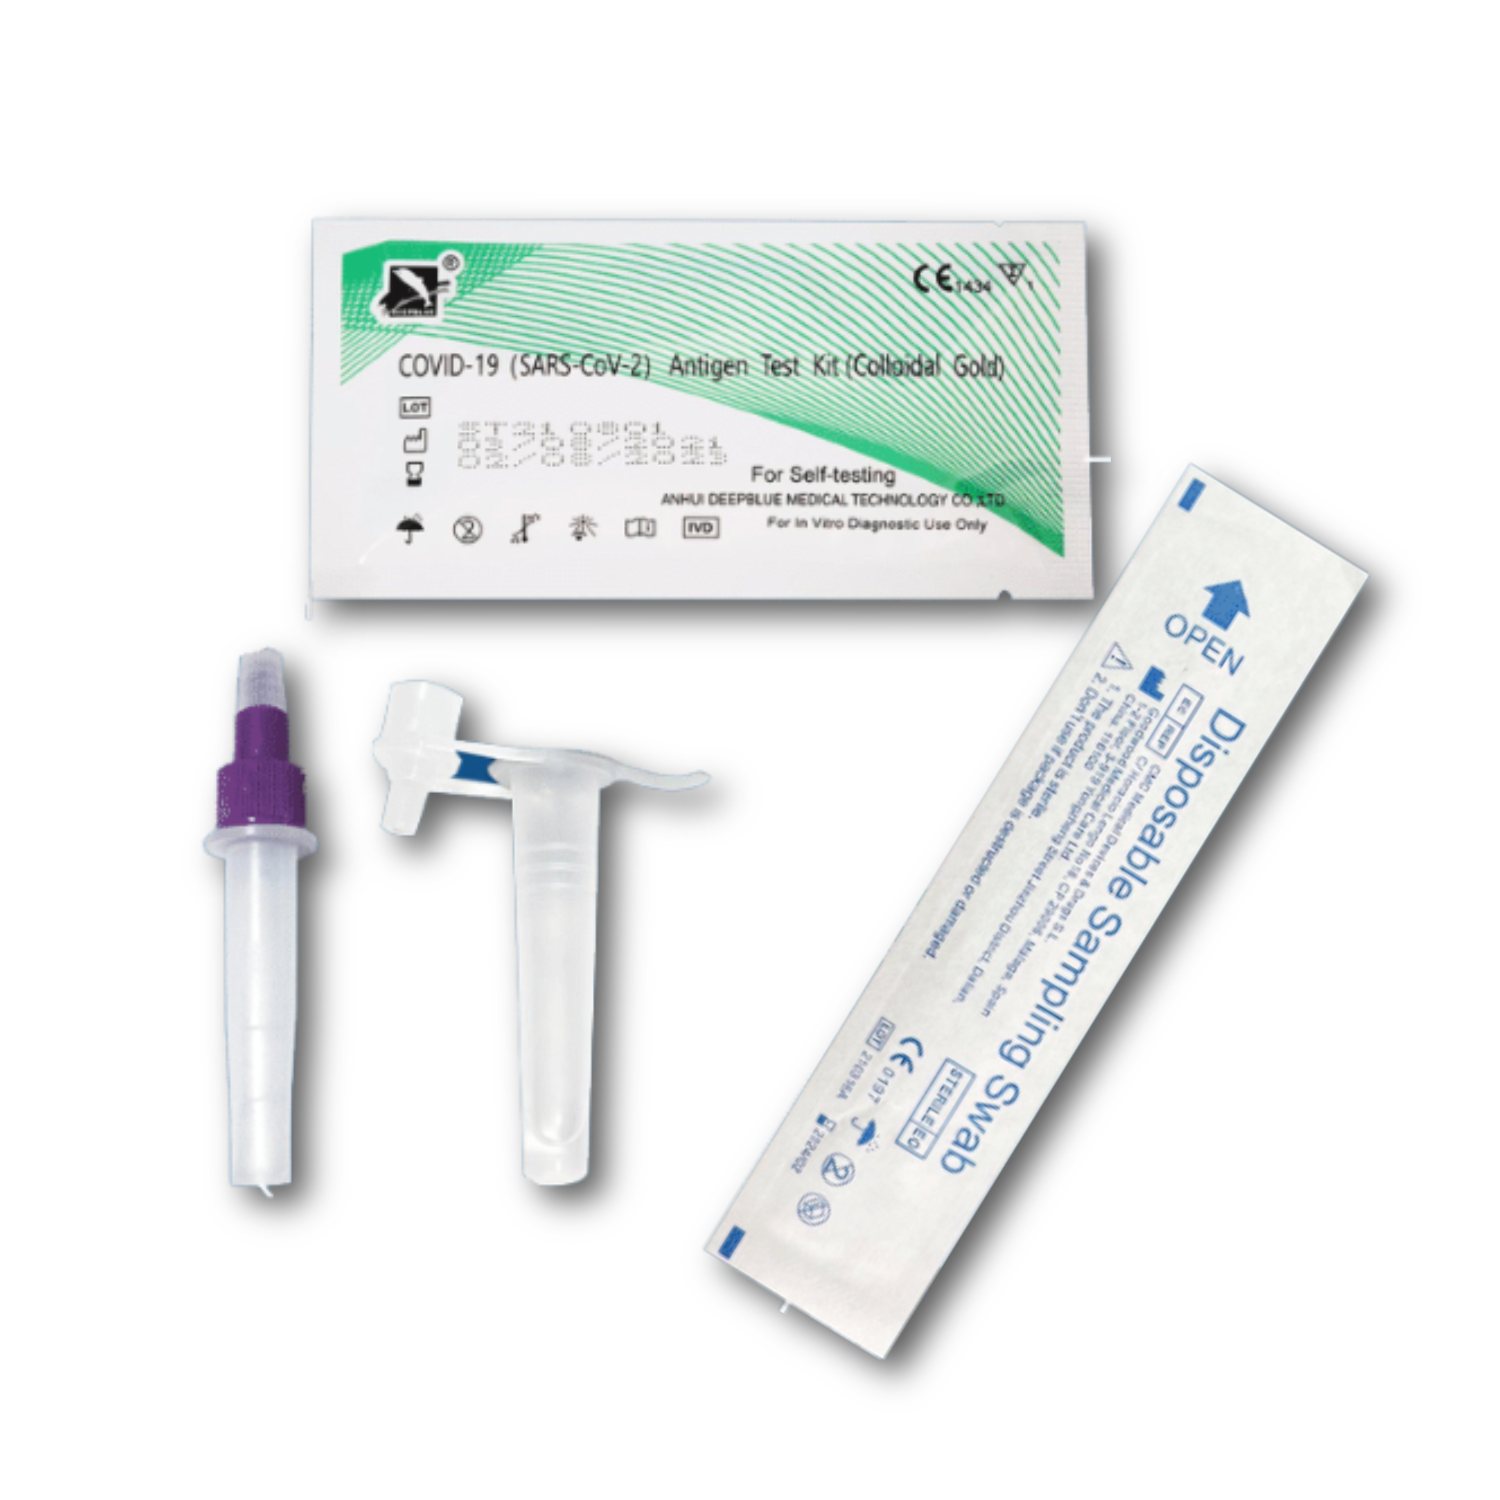 Deep Blue Antigen Test Kit SARS Cov-2 - Rapid antigen test kit for detecting SARS-CoV-2 infections.